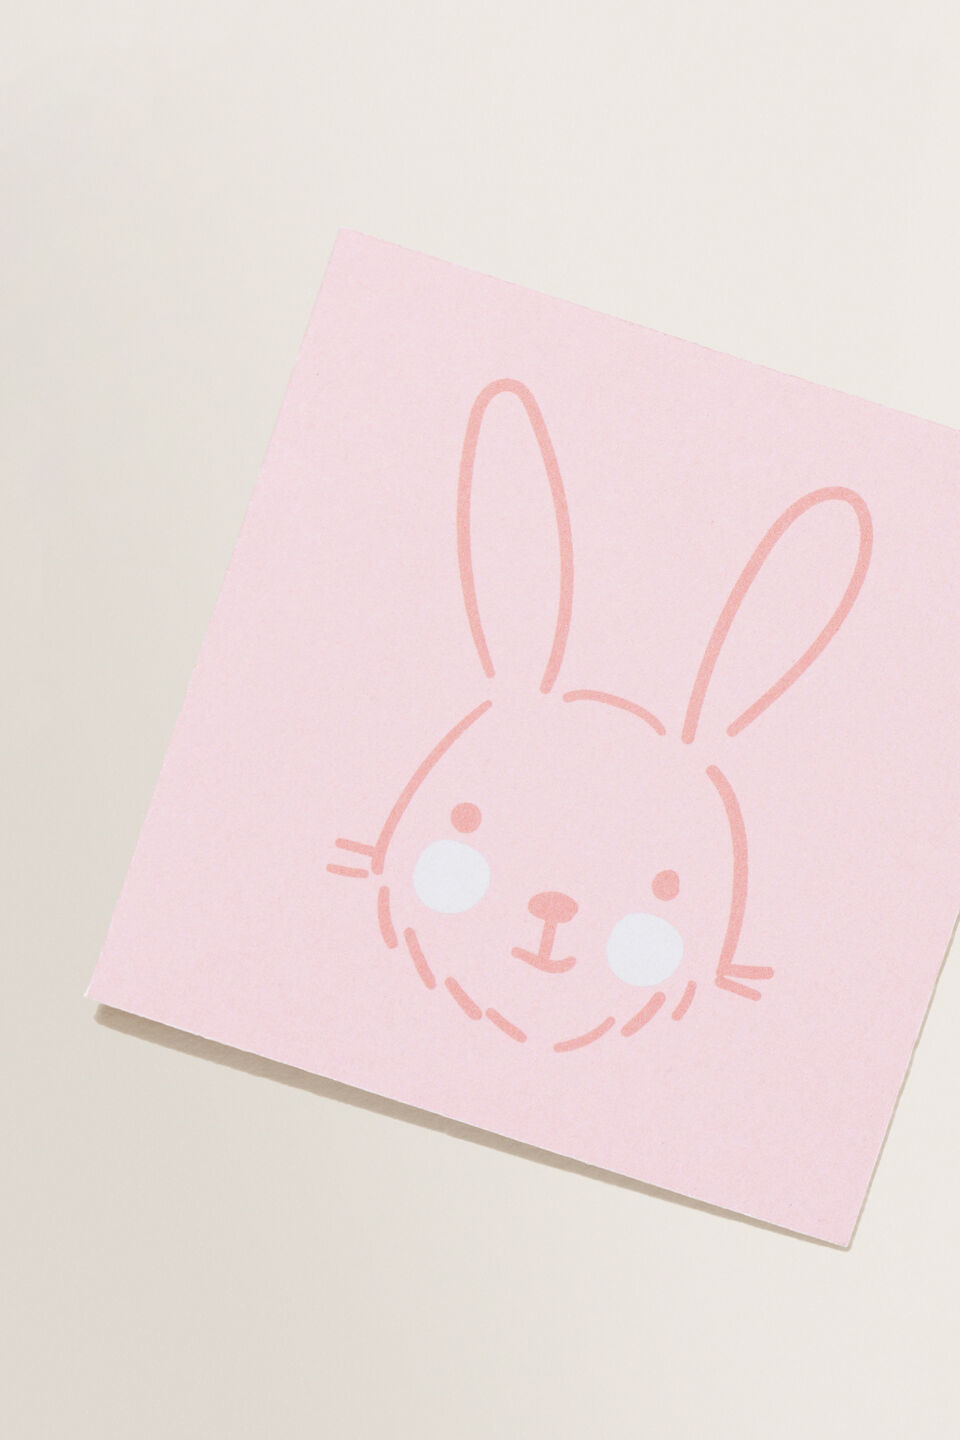 Small Rabbit Card  Multi